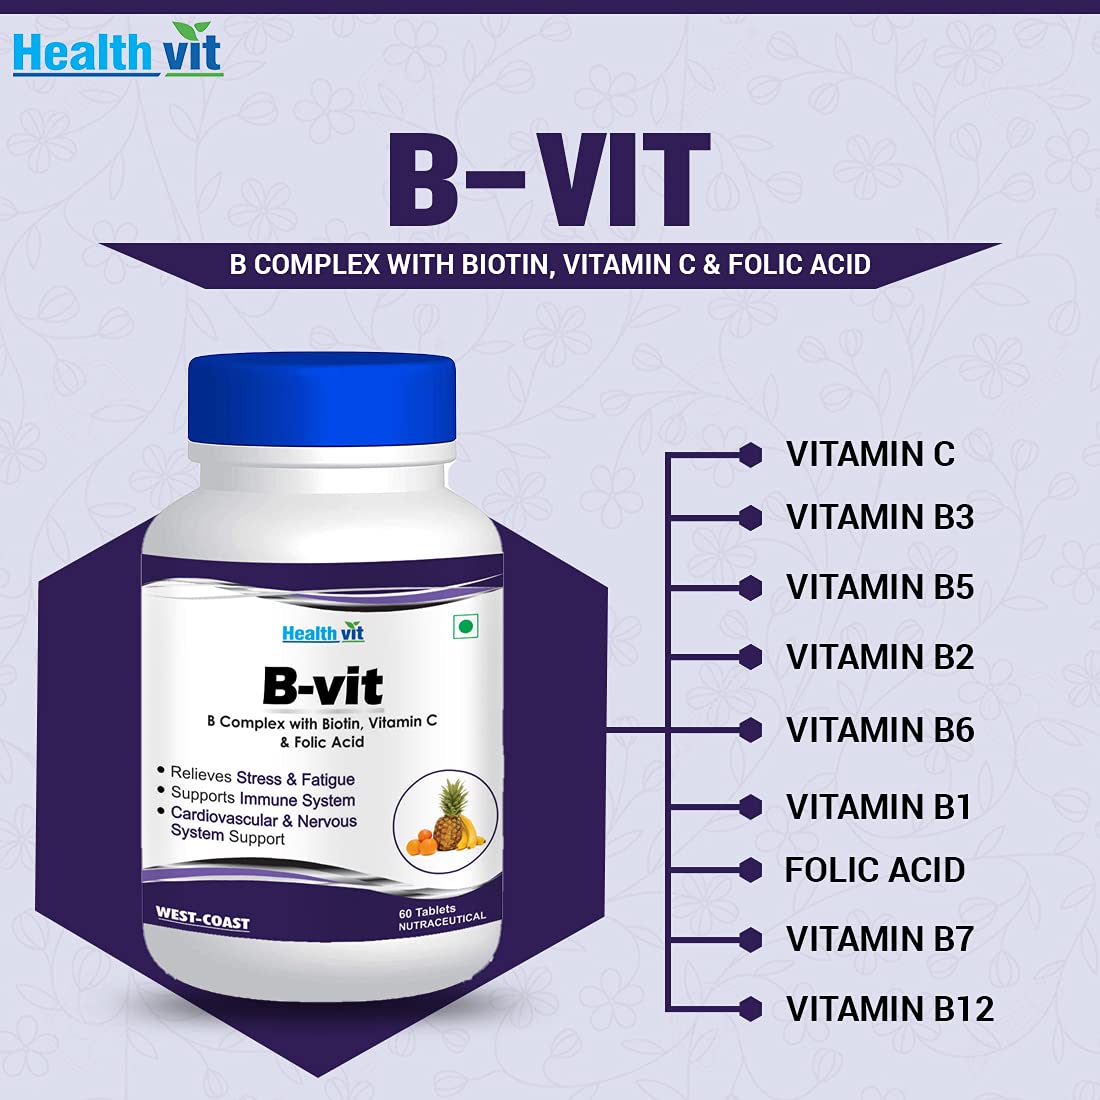 Healthvit Nutrition Natural B-Vit Vitamin B complex with Biotin, Vitamin C and Folic Acid - 60 Tablets